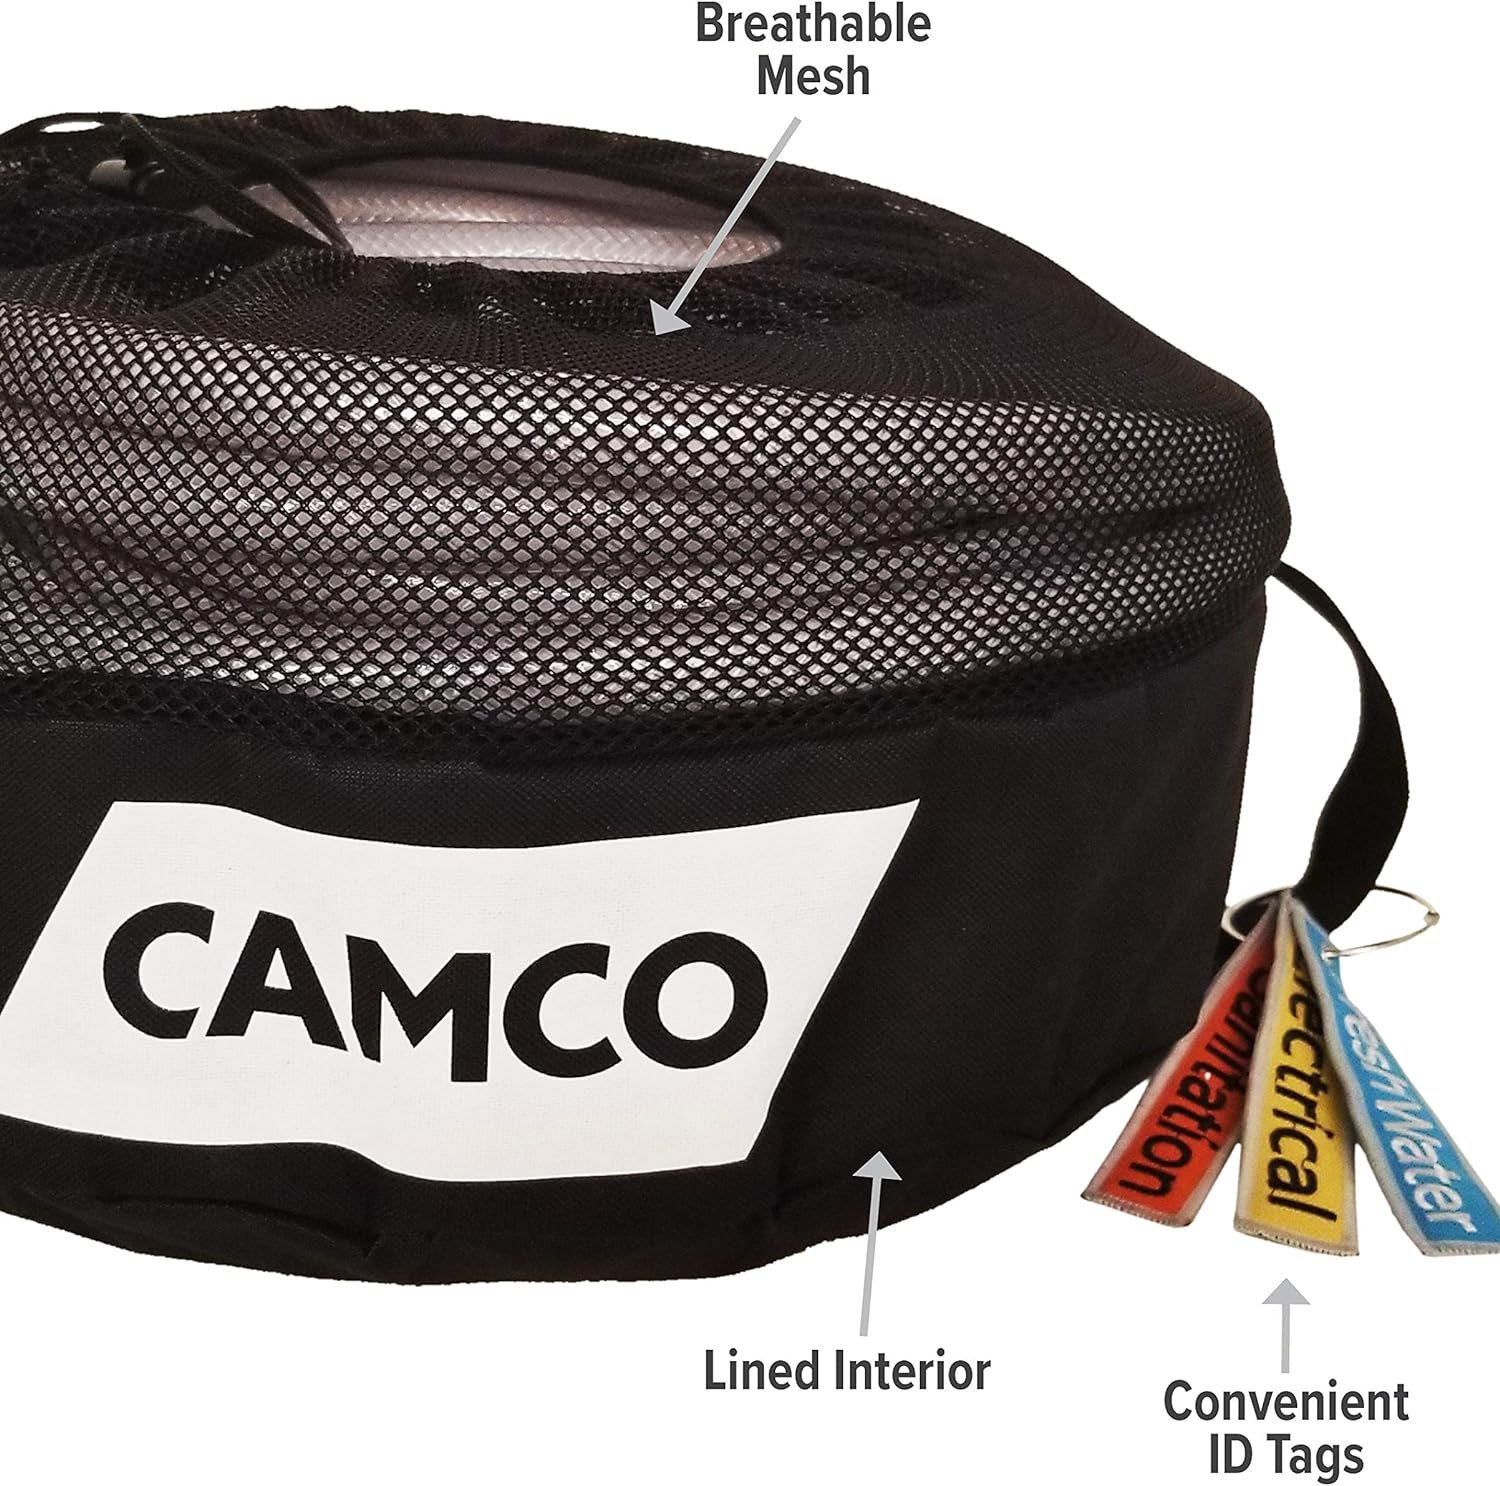 Camco Camper/RV Equipment Storage Bag Review